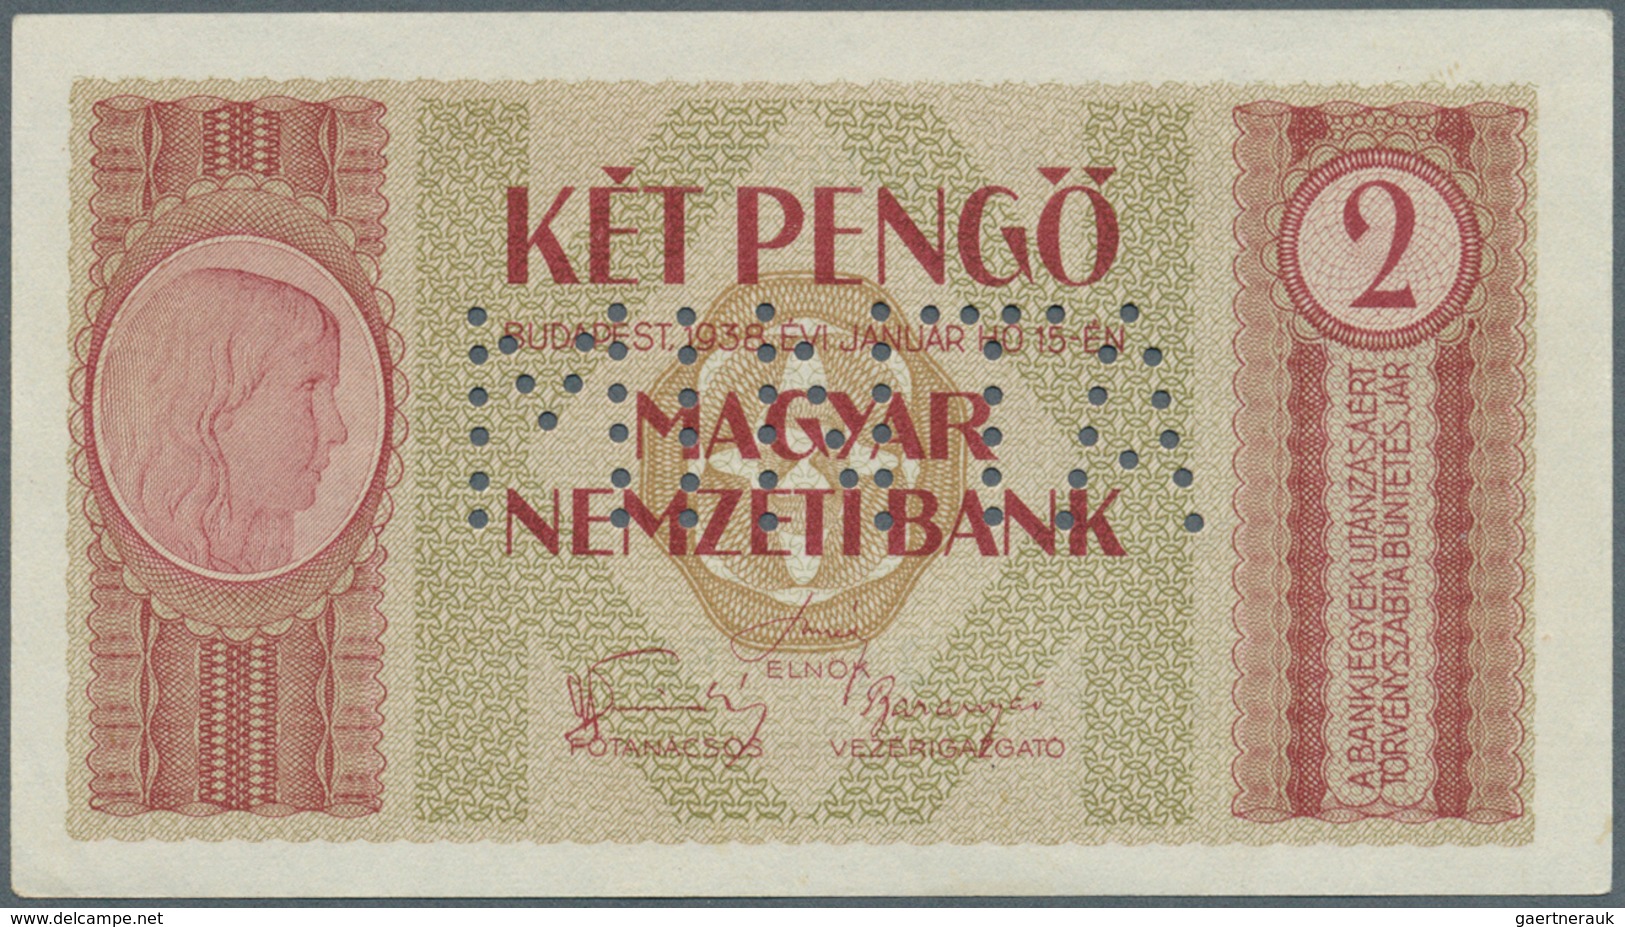 01698 Hungary / Ungarn: Magyar Nemzeti Bank, 2 Pengö 1938 MINTA (Specimen), P.103s, Slightly Edge Bend At - Hungría